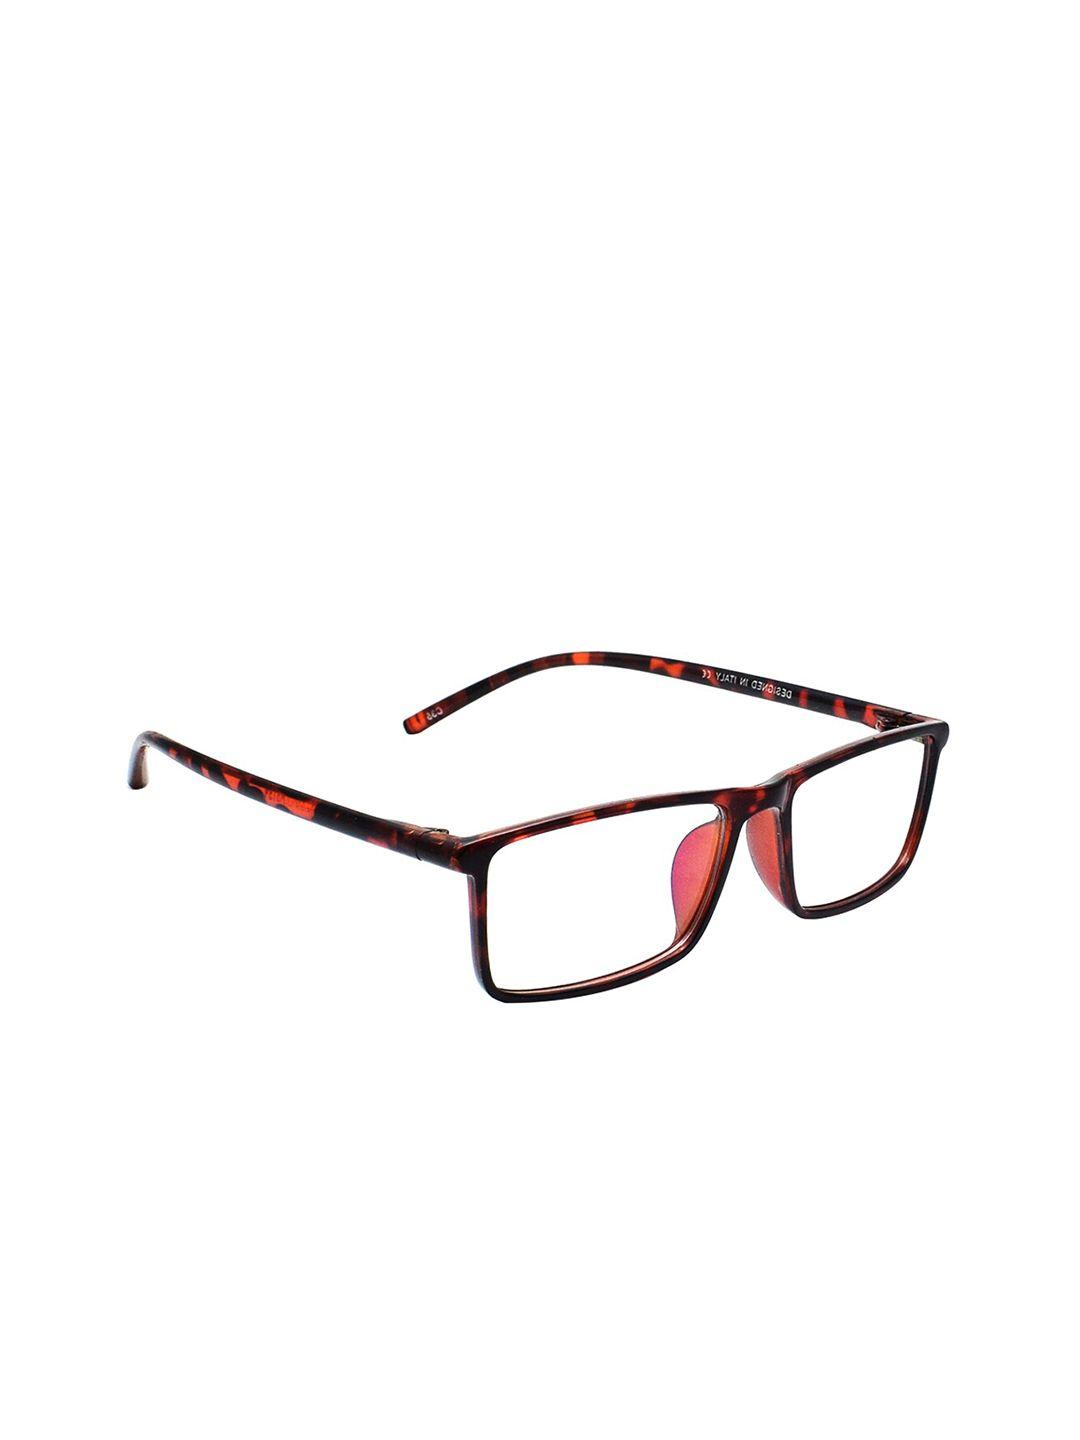 peter jones eyewear unisex brown & red abstract full rim rectangle frames 6059da